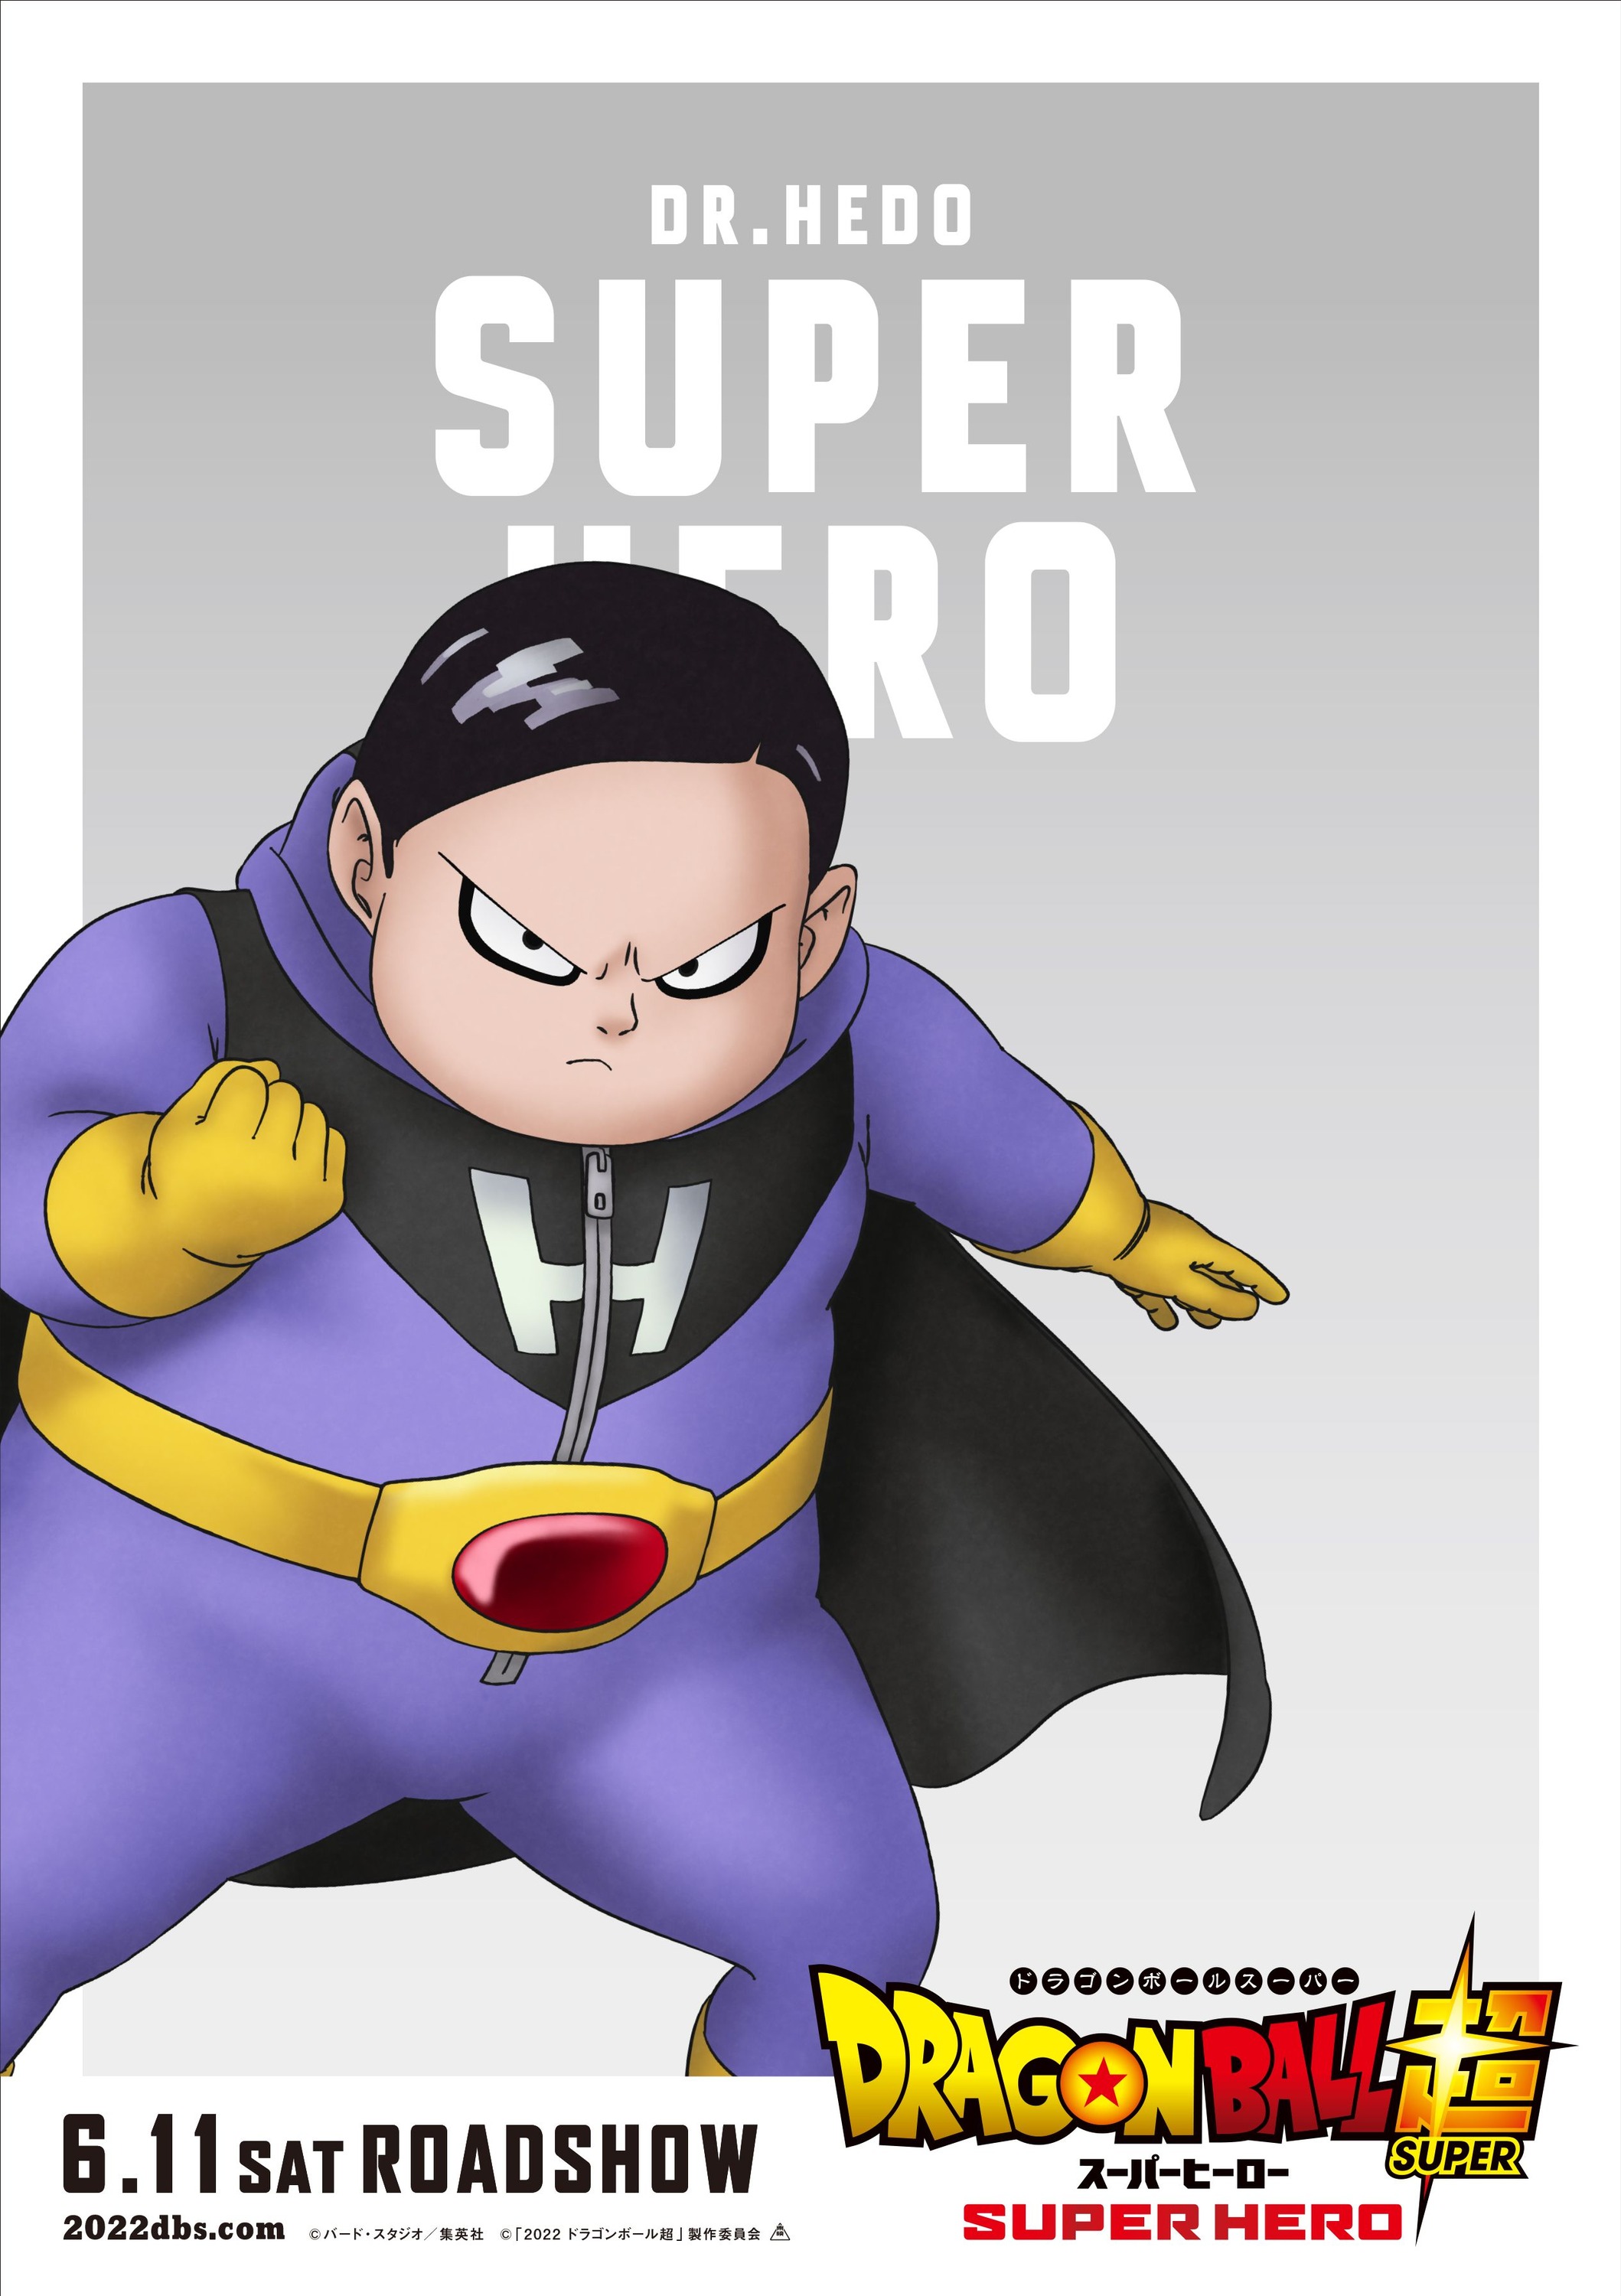 Mega Sized Movie Poster Image for Doragon boru supa supa hiro (#4 of 11)